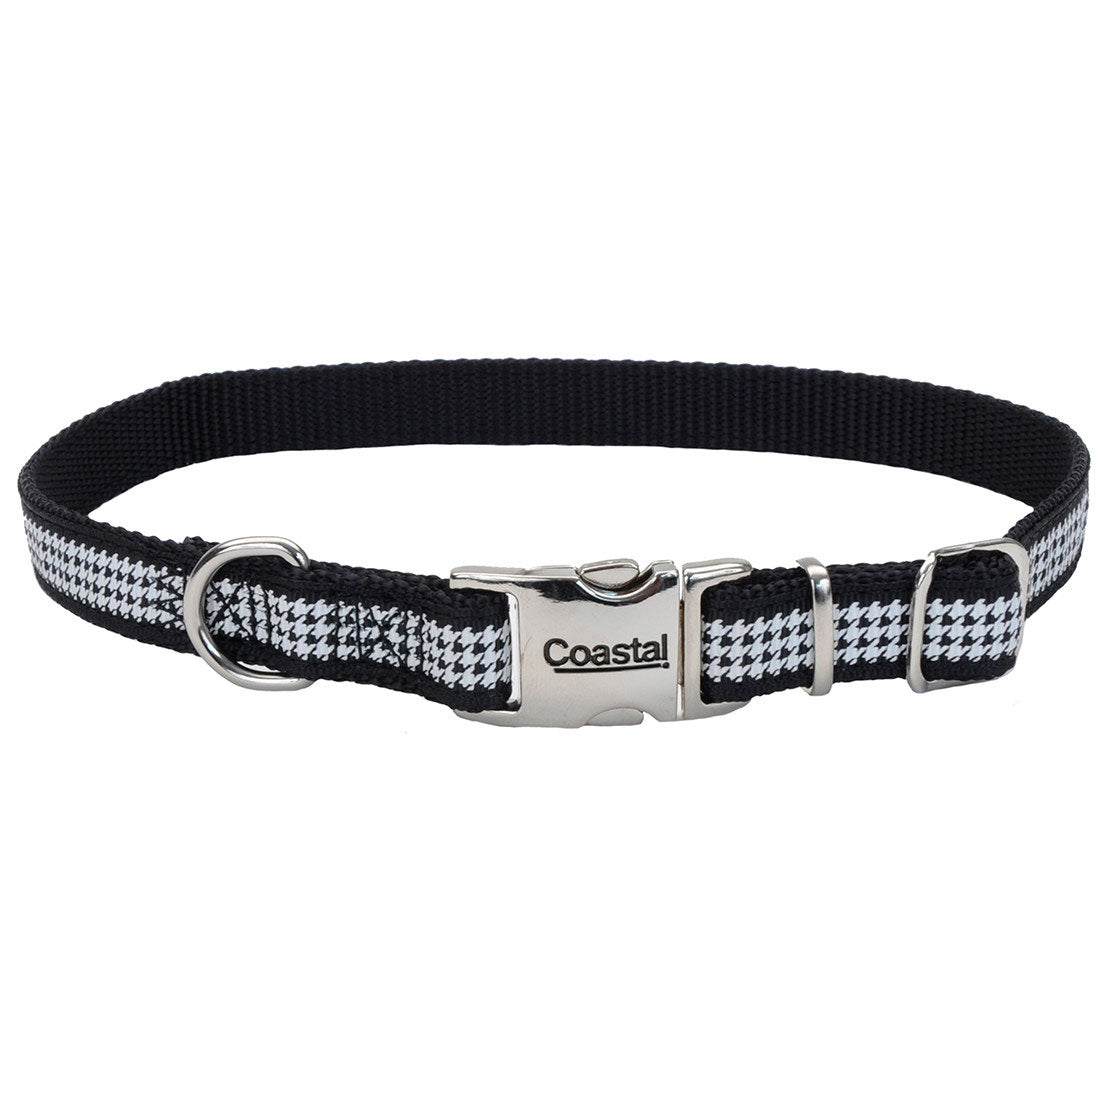 Coastal Ribbon Adjustable Dog Collar with Metal Clip Green Paw & Bone S/M